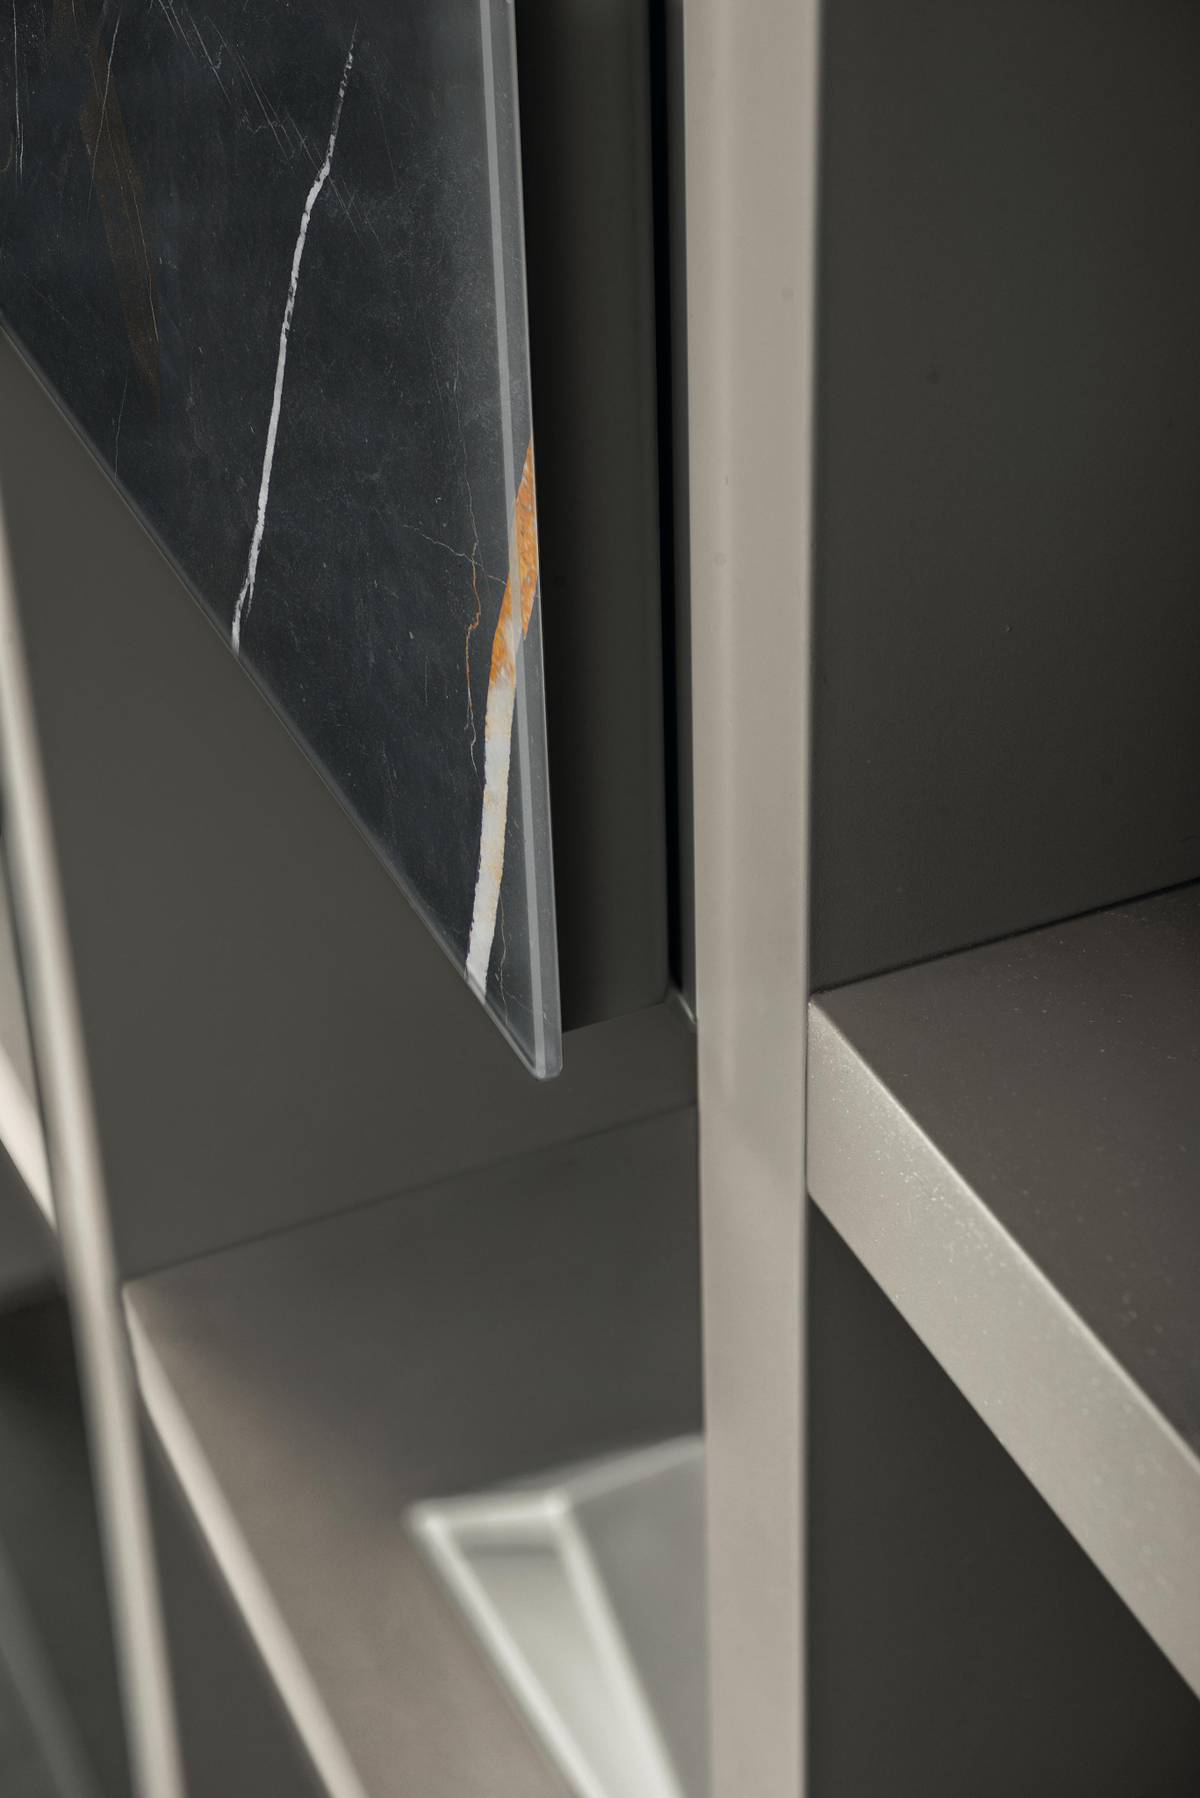 bookcase shelves with glass storage unit detail | 30mm Bookshelf | LAGO